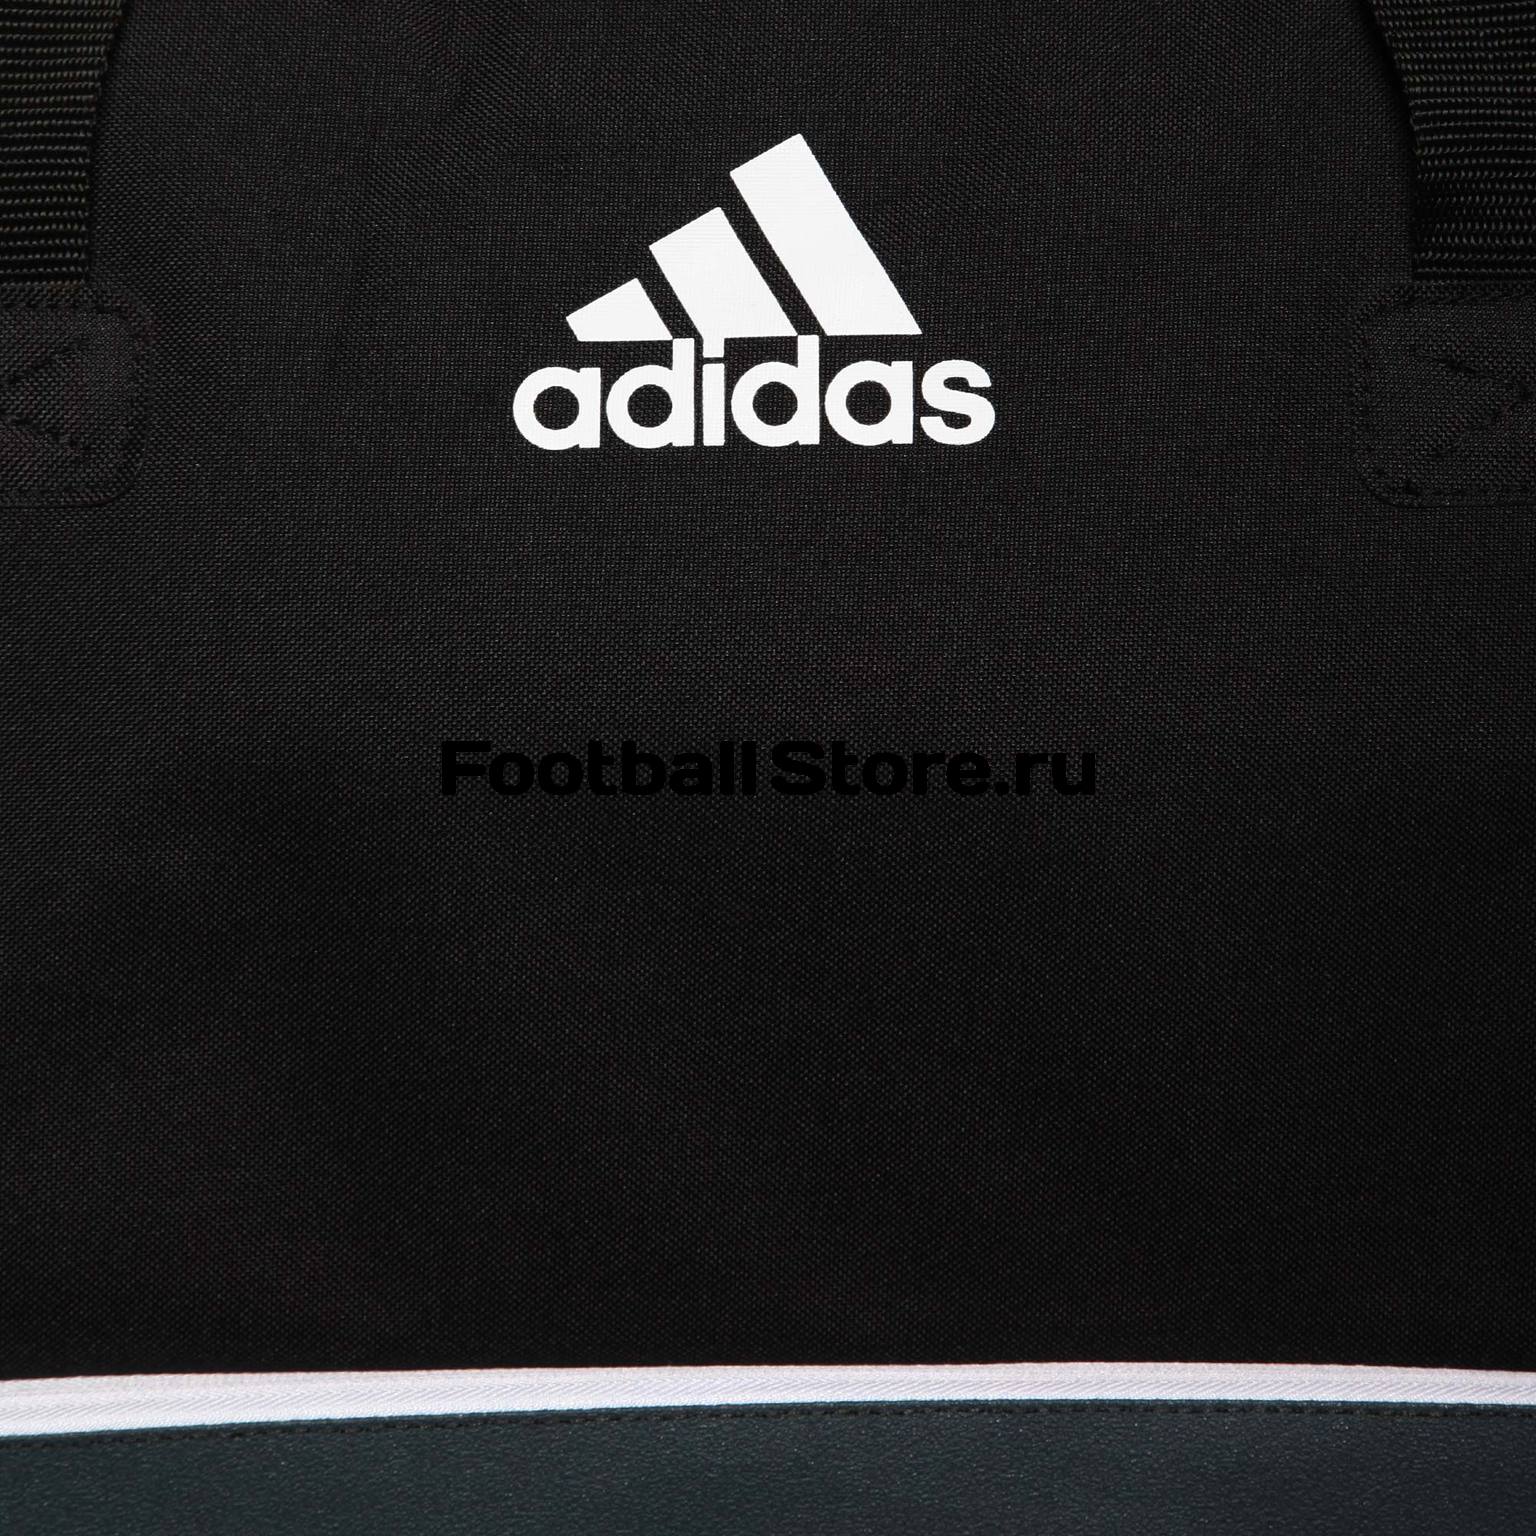 Сумка Adidas Tiro TB BC L B46122 купить в интернет магазине FootballStore, цена, фото, доставка